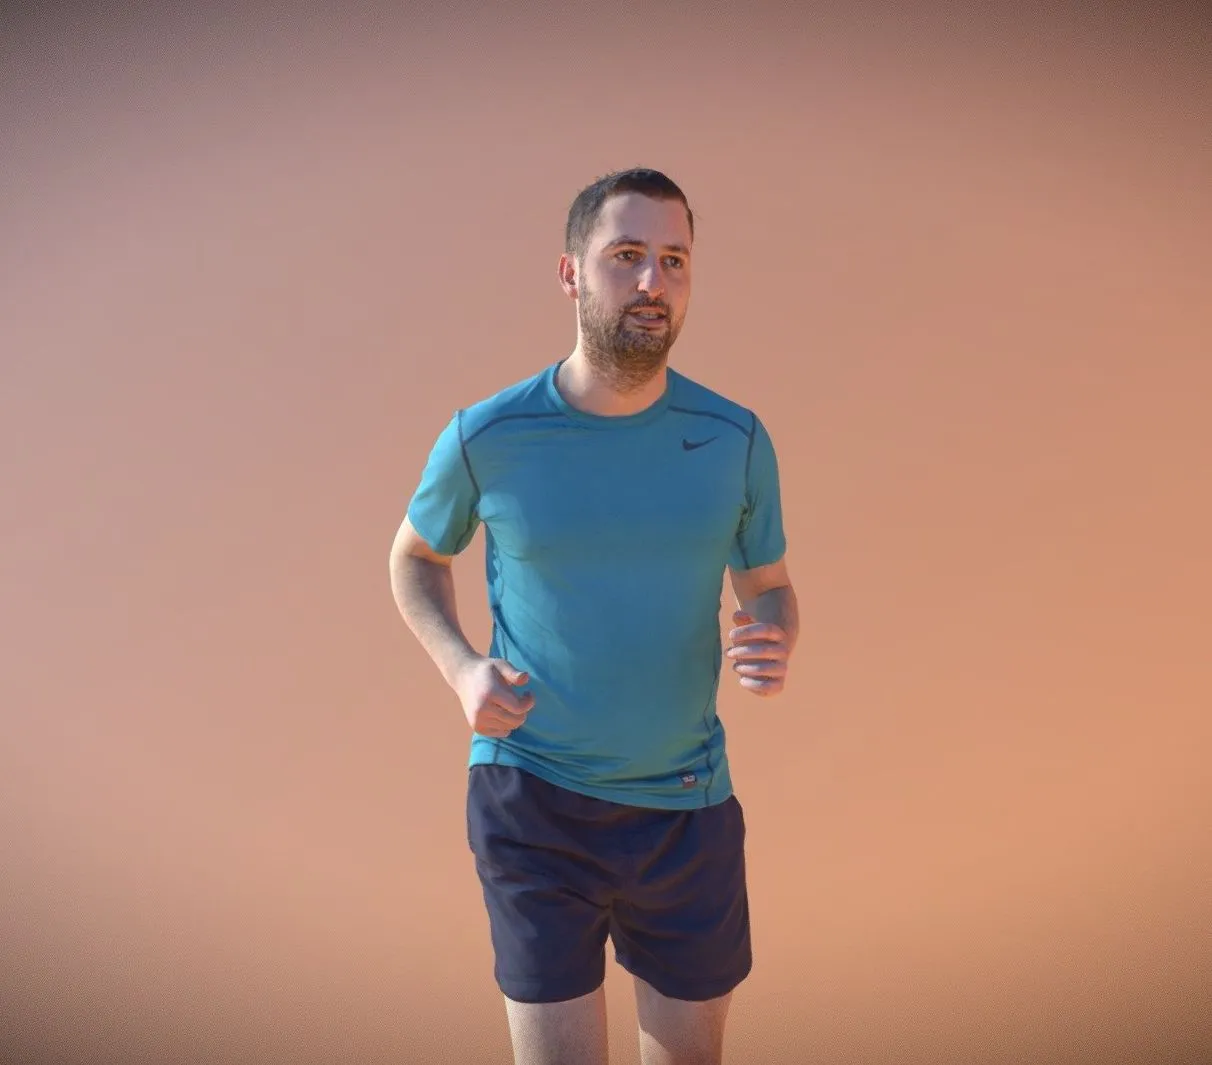 PBR Game 3D Model – Portrait Sportswear Casual Man in Shorts Running Jogging